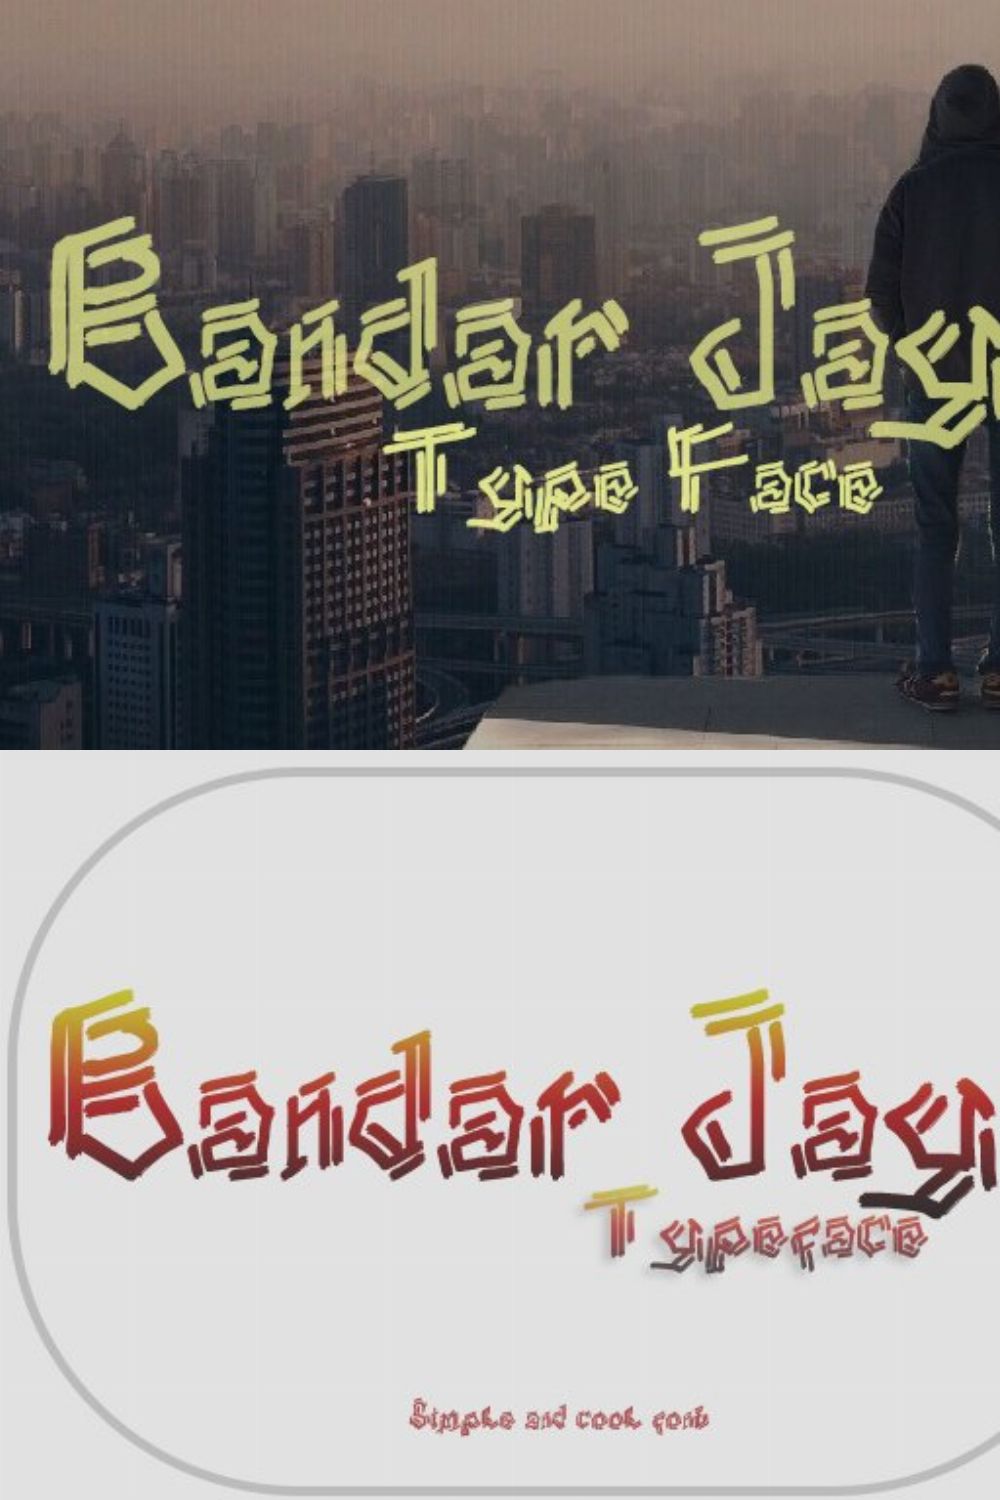 Bandar Jaya pinterest preview image.